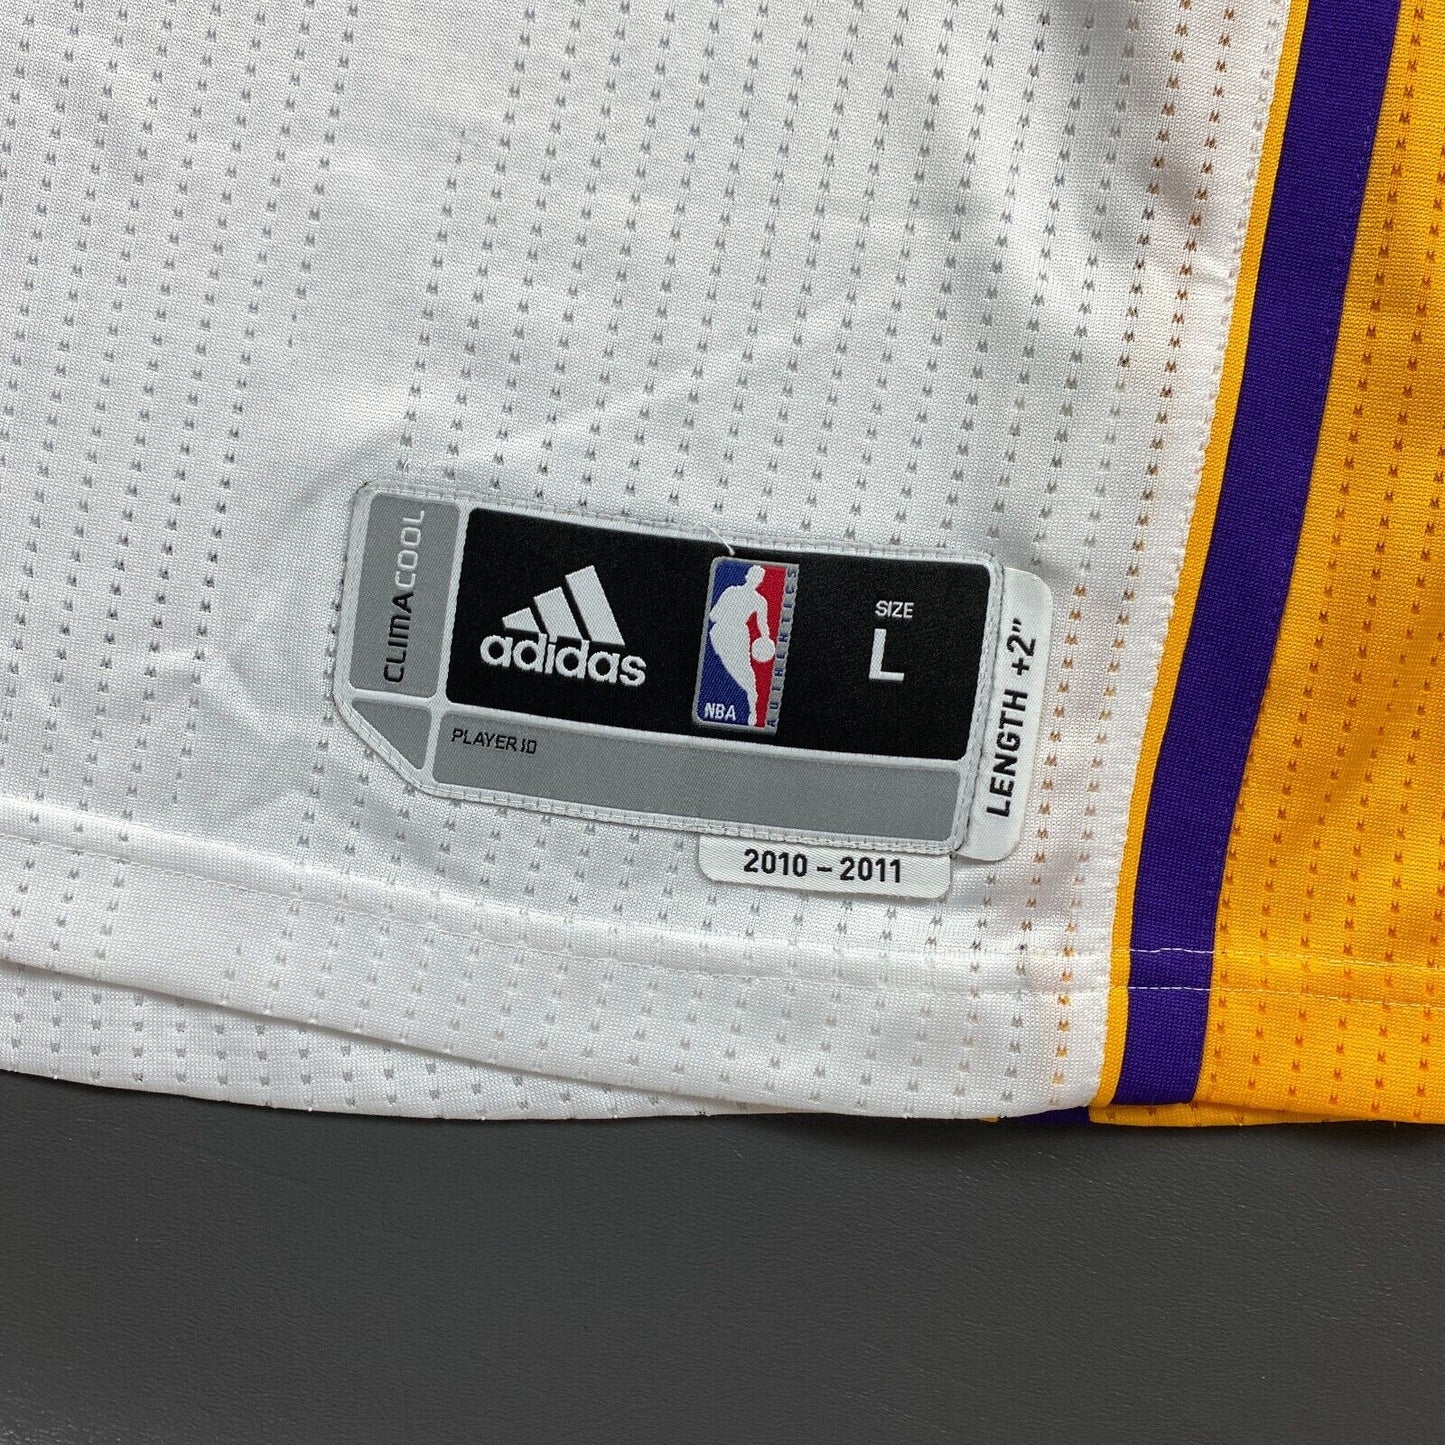 100% Authentic Kobe Bryant 2010 2011 Lakers Jersey Size L 44 Mens Pro Cut Mesh #